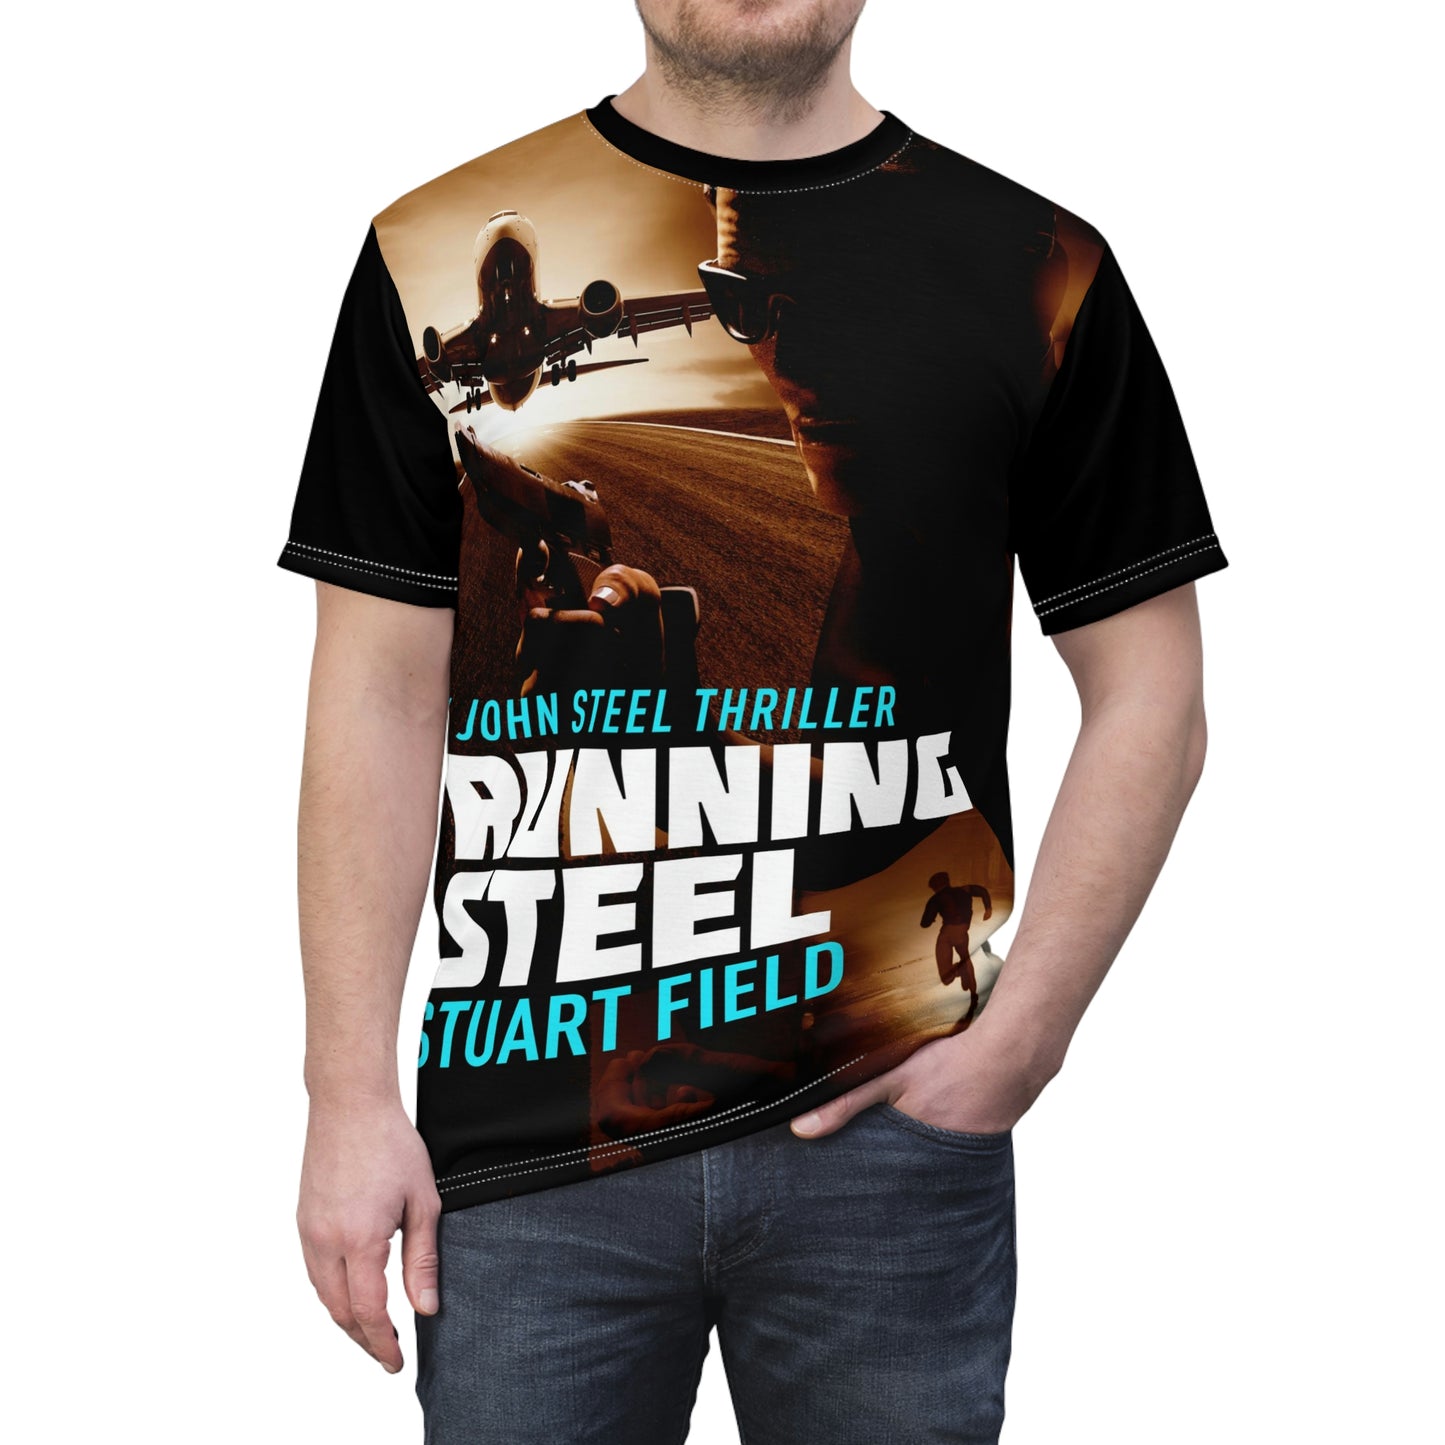 Running Steel - Unisex All-Over Print Cut & Sew T-Shirt